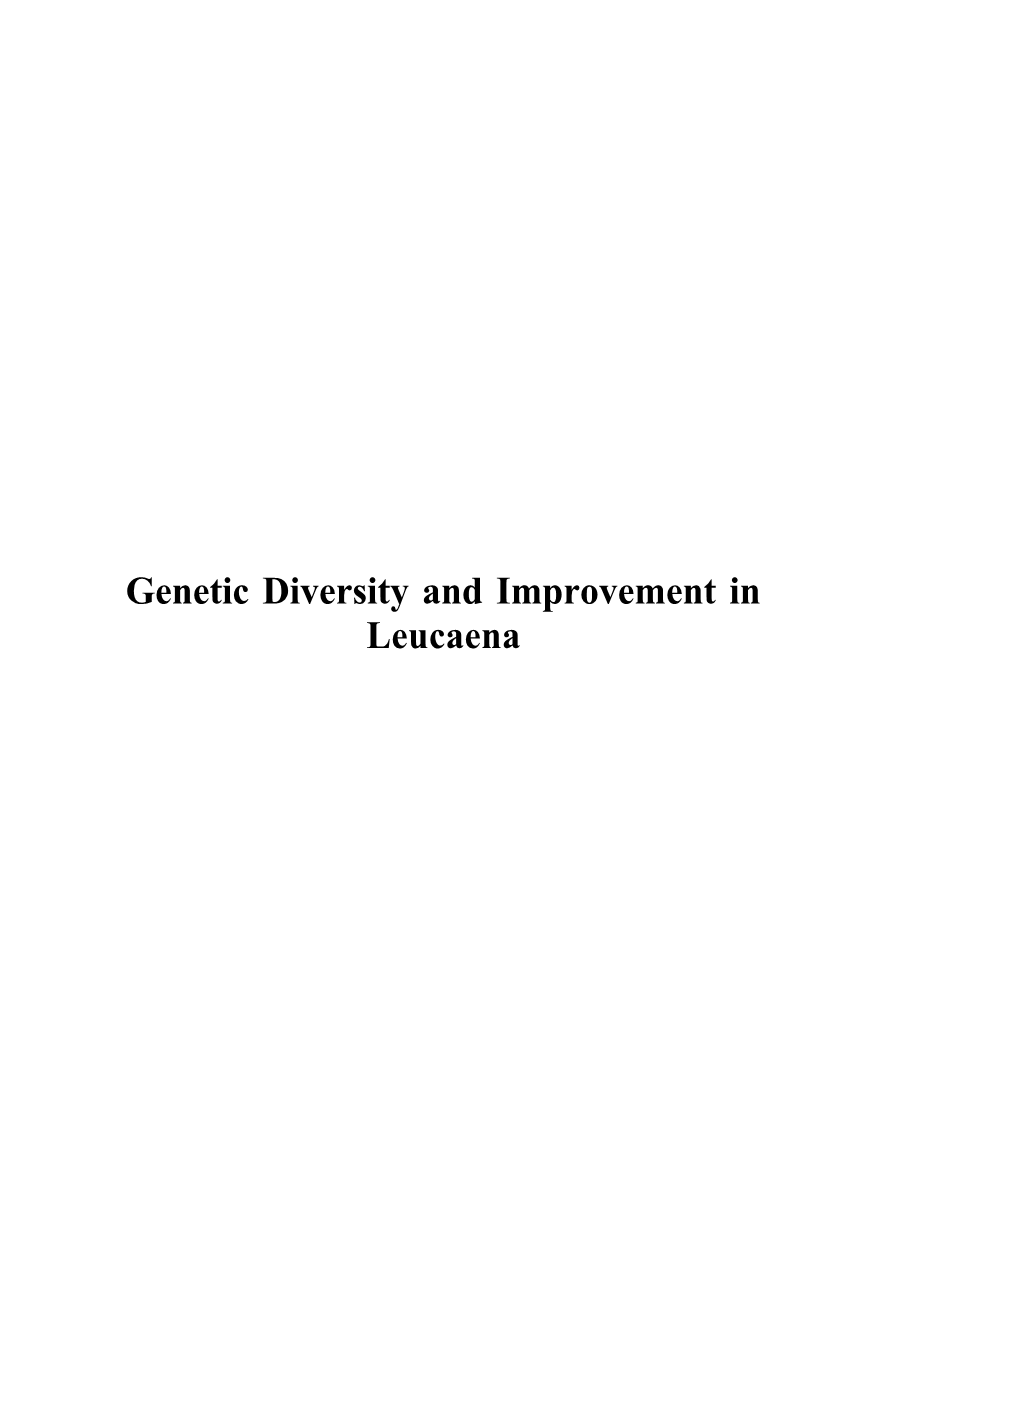 Genetic Diversity and Improvement in Leucaena Potential for Improvement of Leucaena Through Interspecific Hybridisation